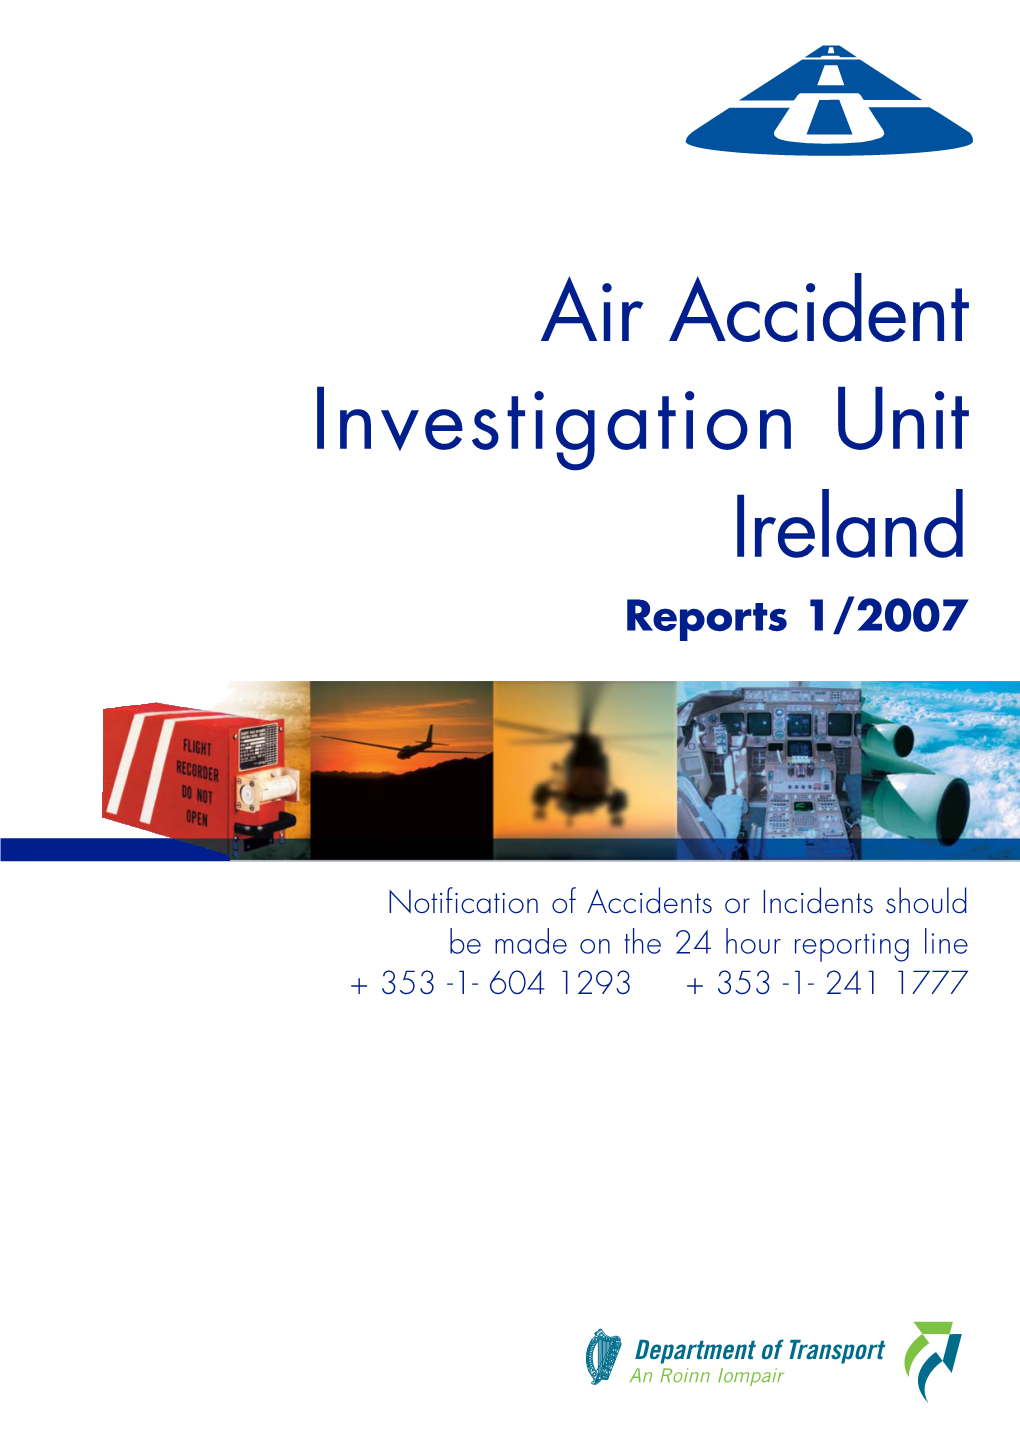 Air Accident Investigation Unit Ireland Reports 1/2007